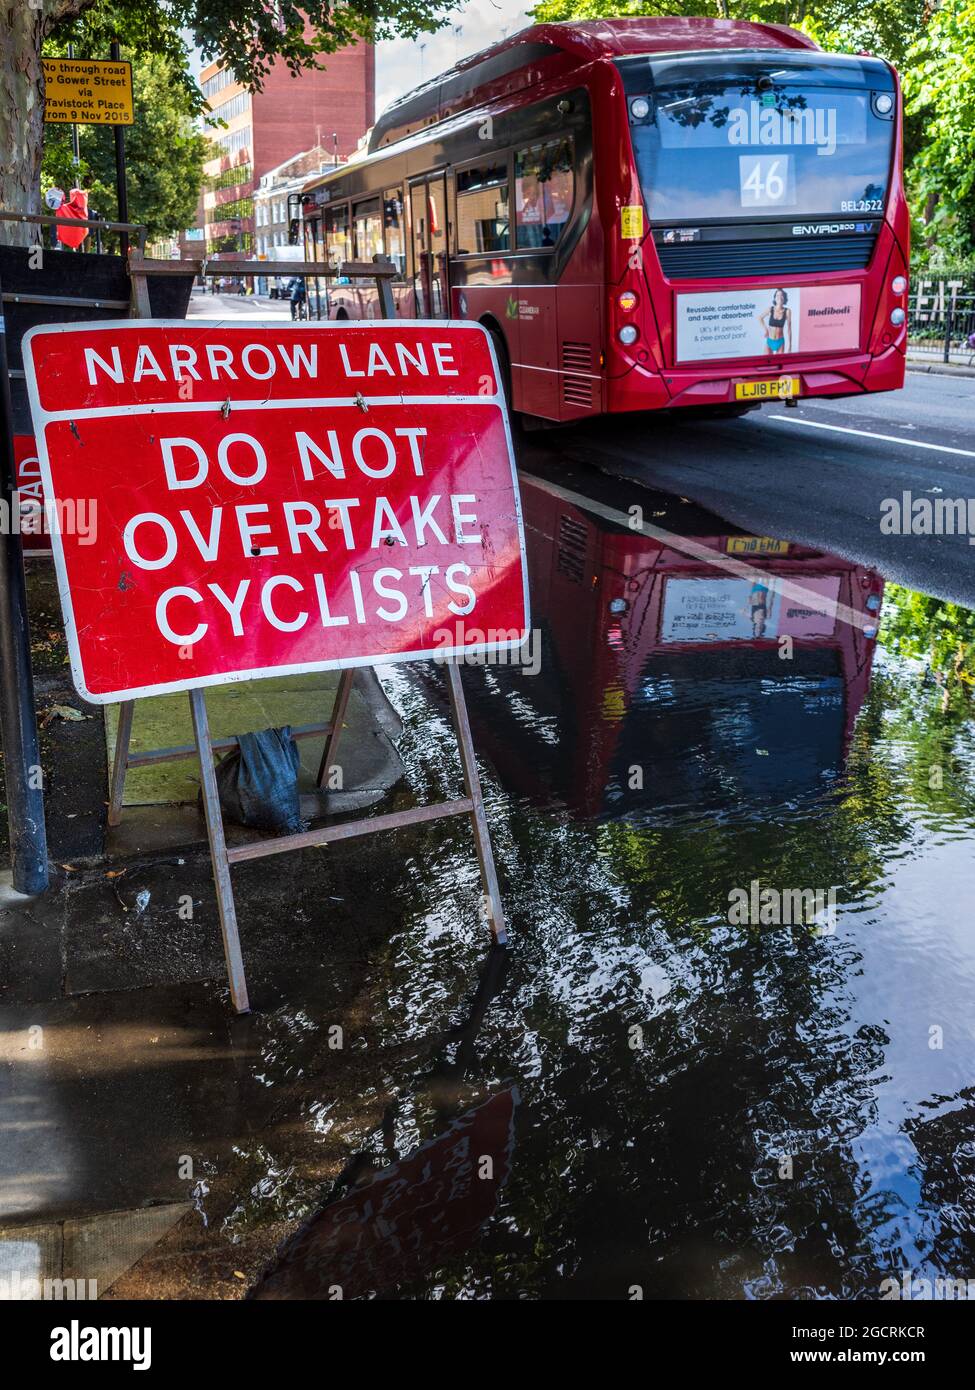 Do Not Overtake Cyclists sign - Narrow Lane Do Not Overtake Cyclists Sign in Central London. Stock Photo